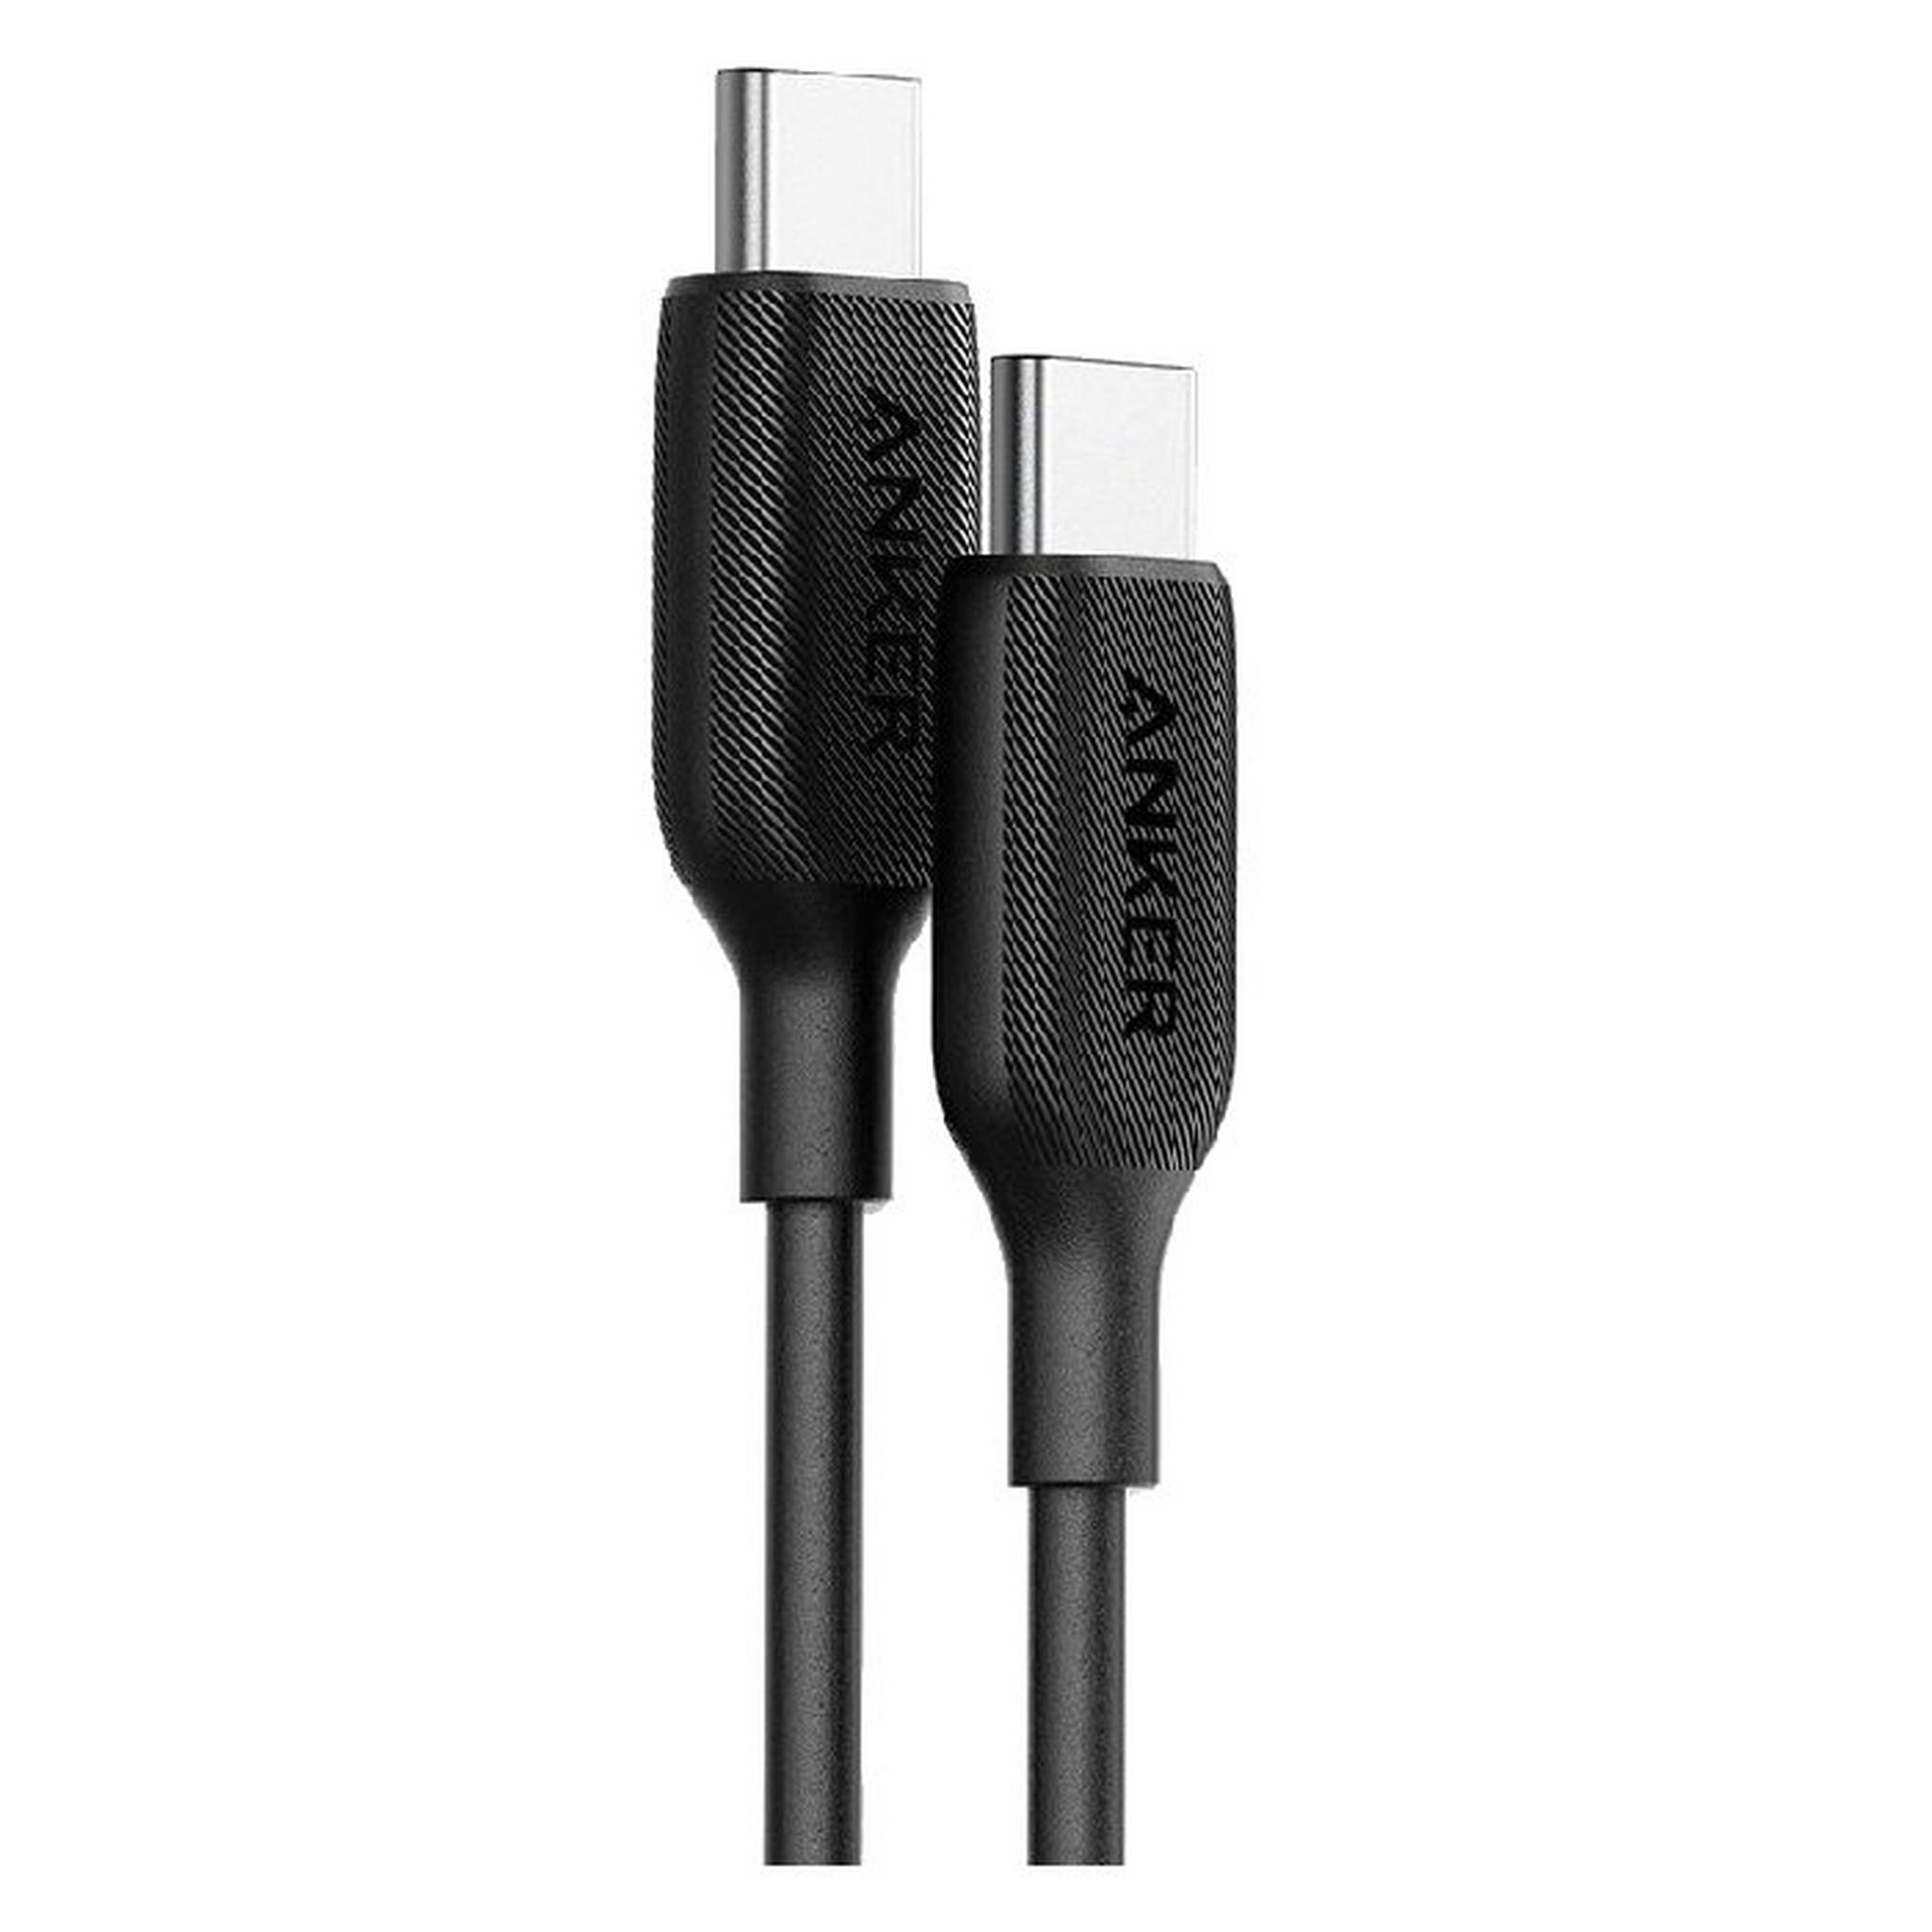 Anker PowerLine + III USB-C to USB-C Cable (3 Feet) - Black